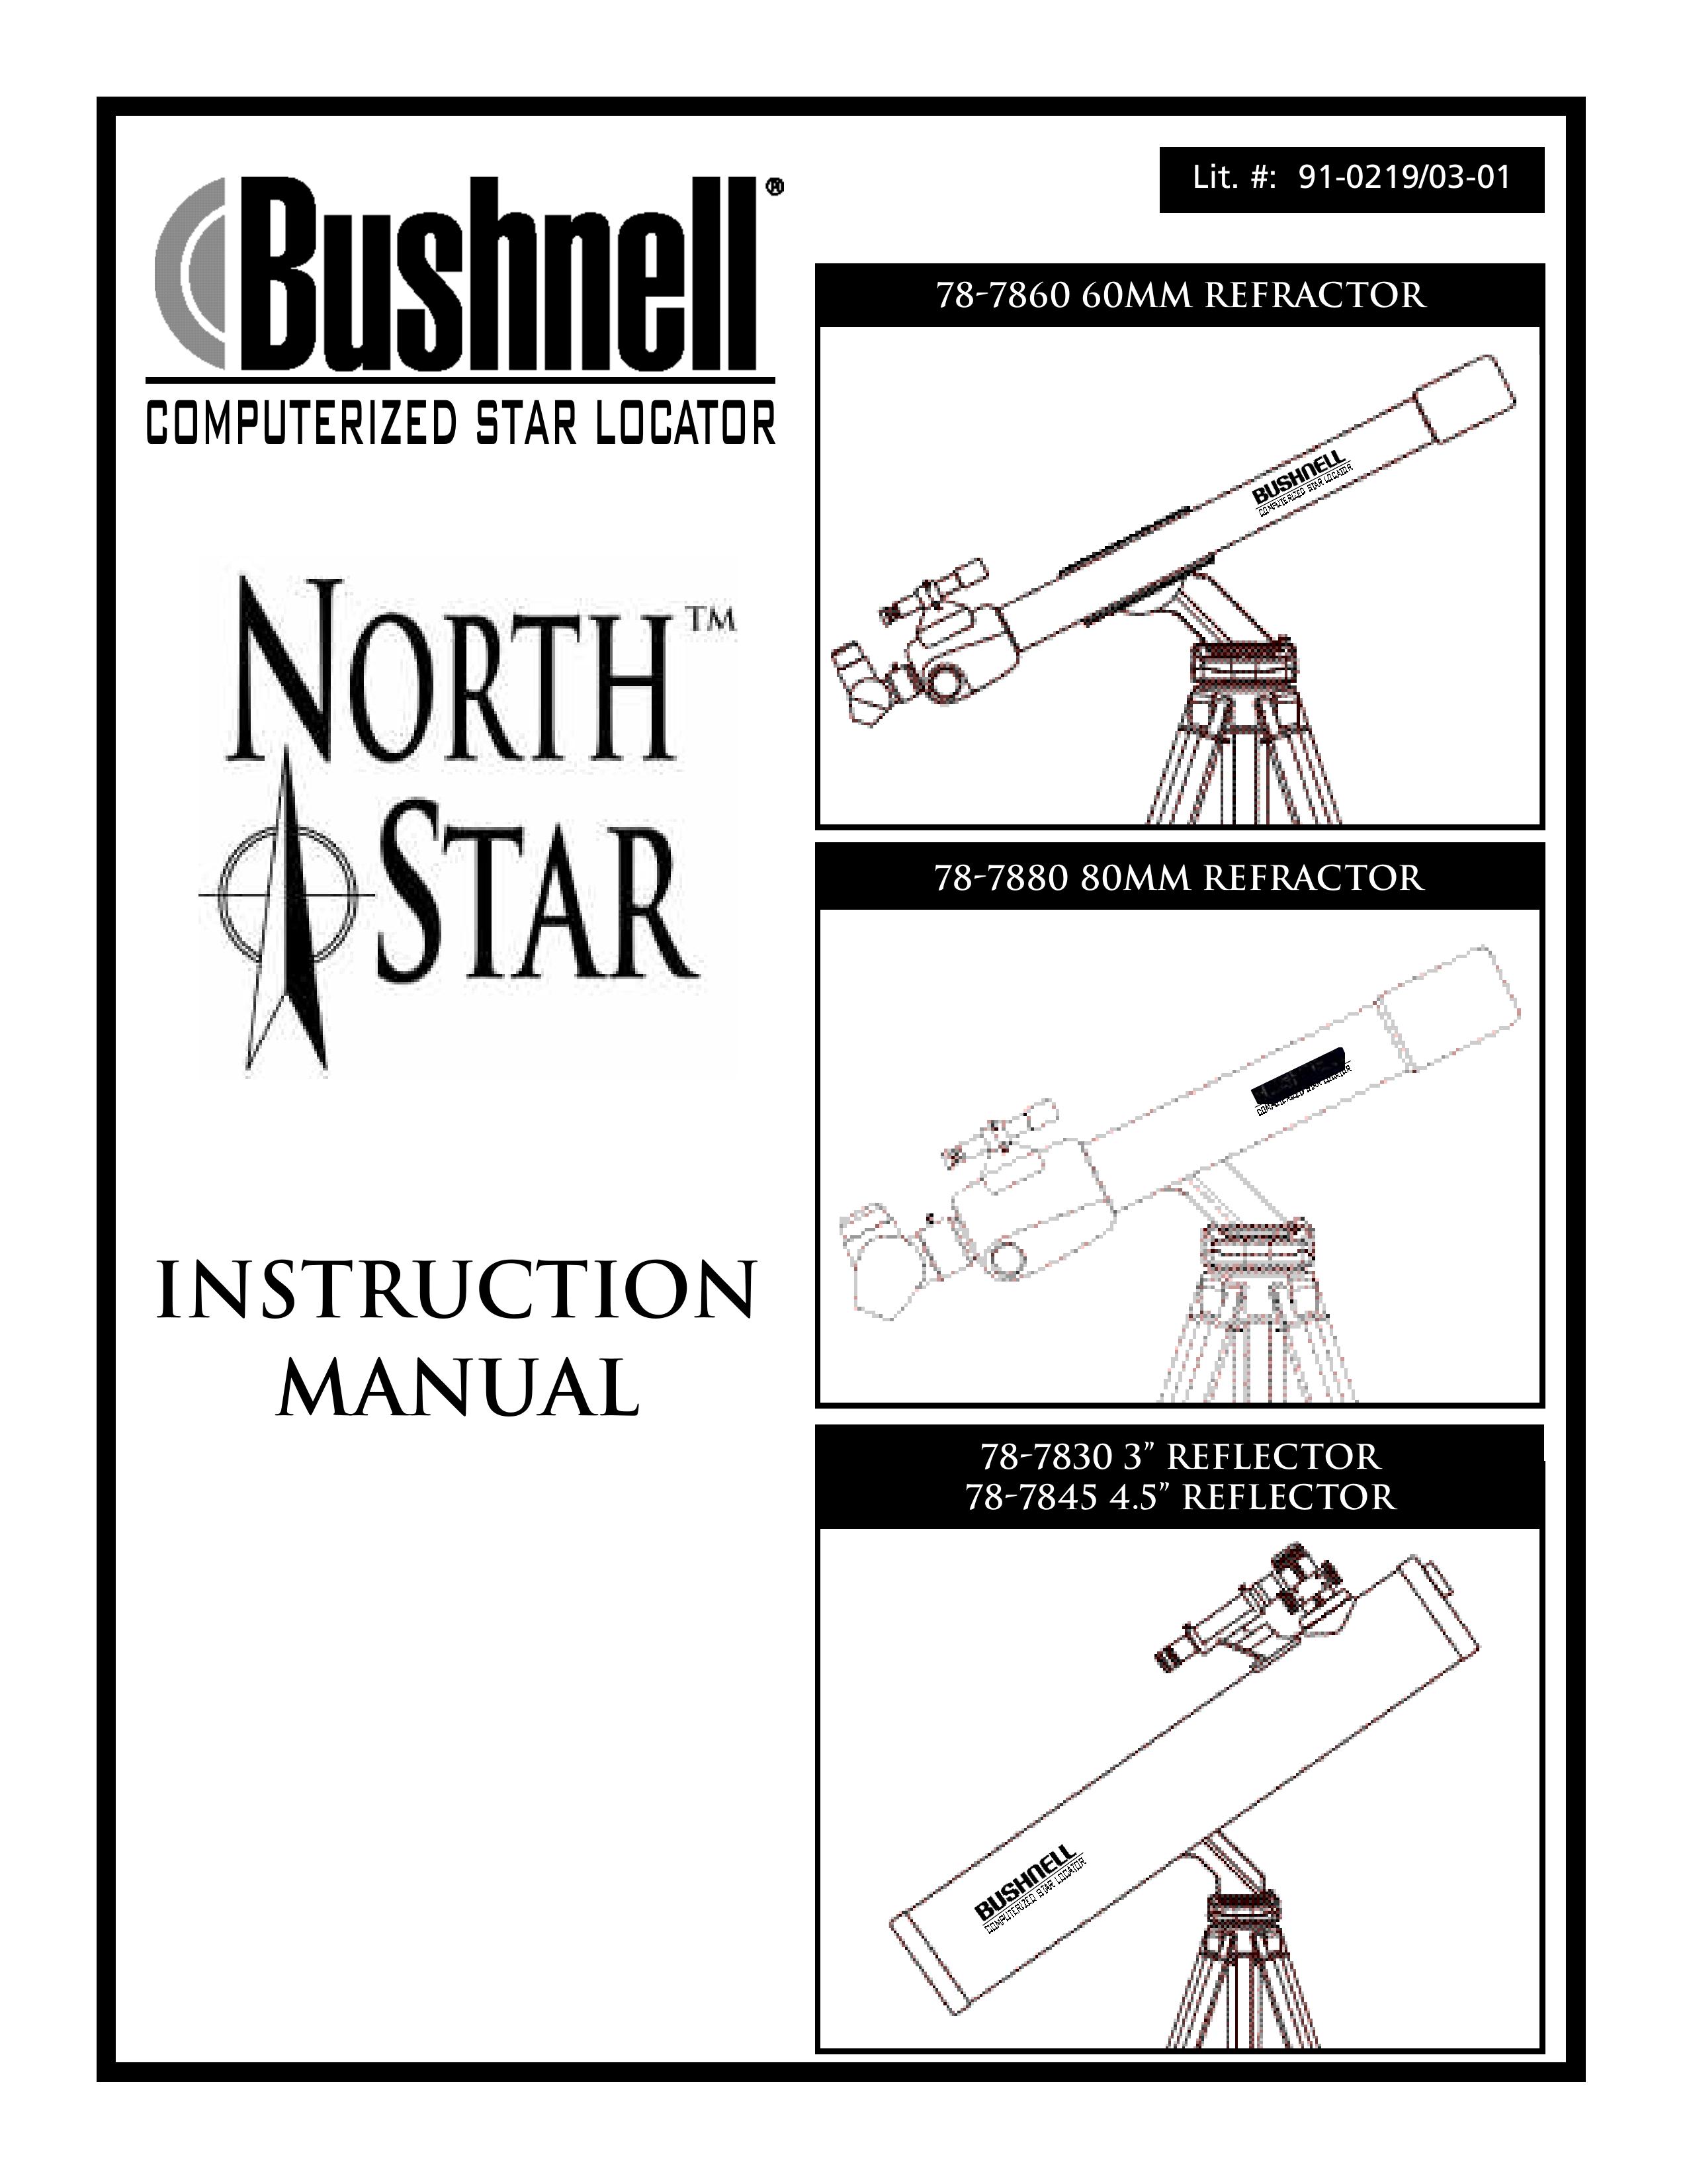 Bushnell 78-7845 4.5 REFLECTOR Telescope User Manual